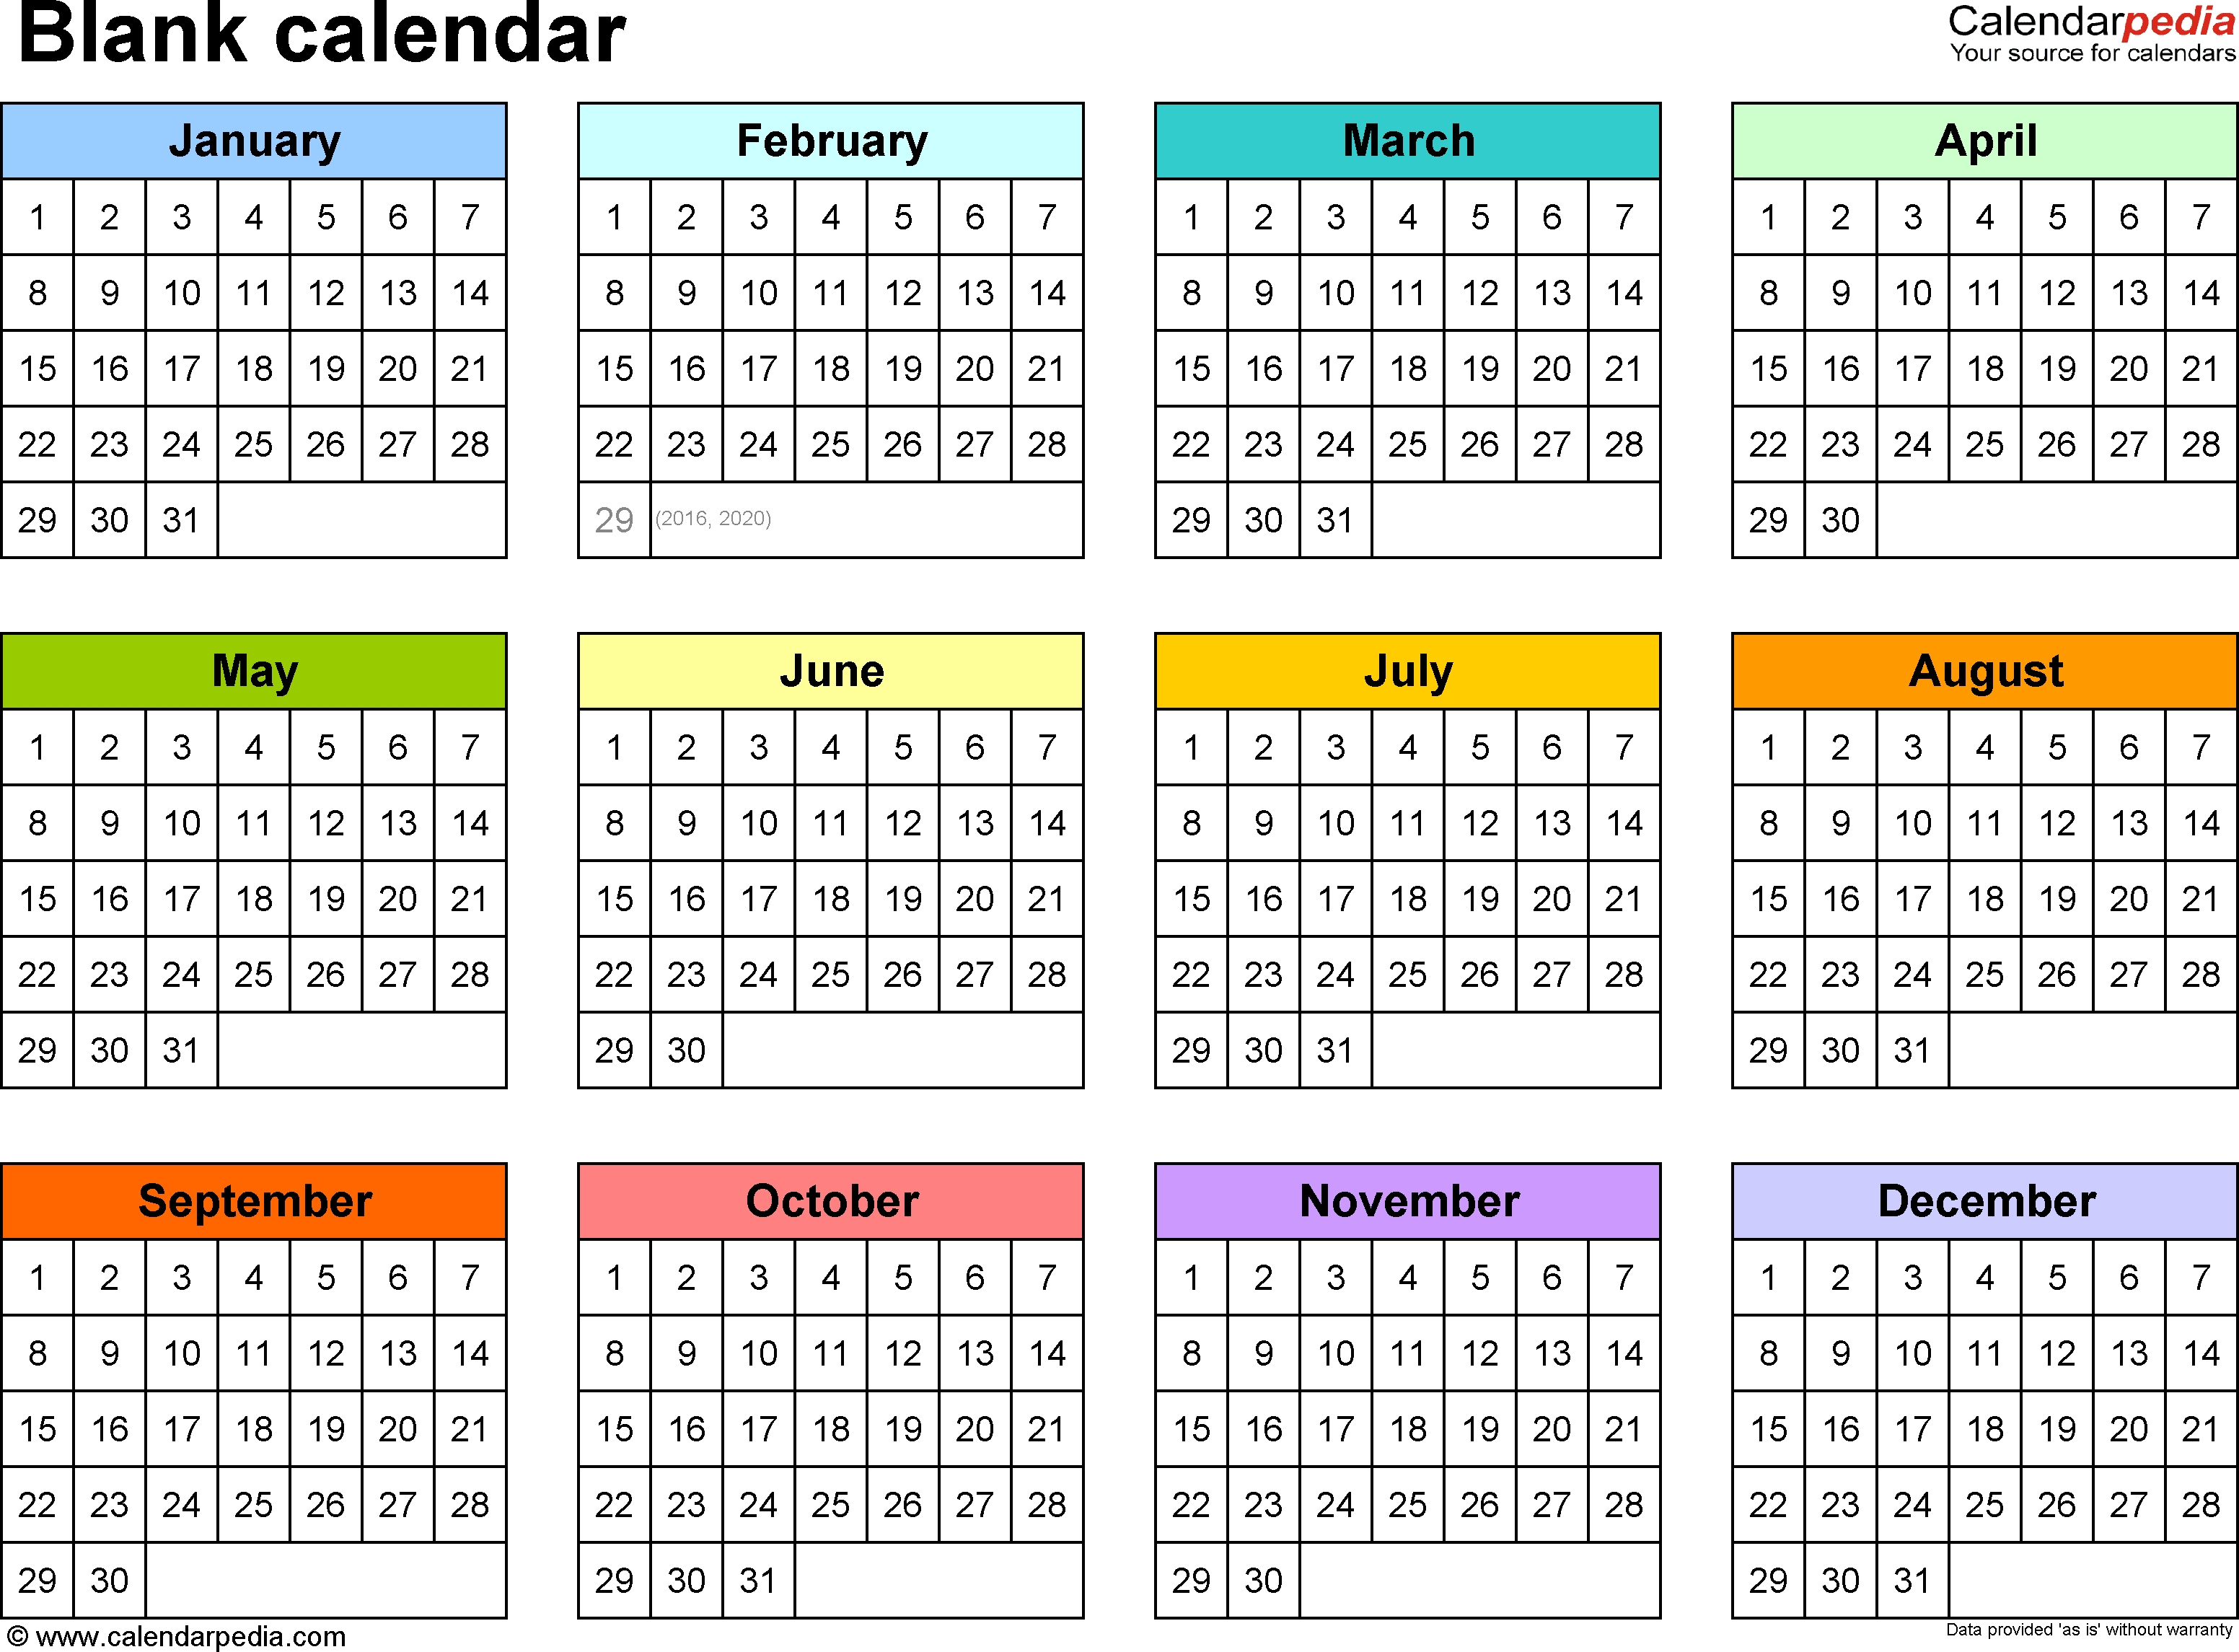 Blank Calendar - 9 Free Printable Microsoft Word Templates Blank Calendar Whole Year